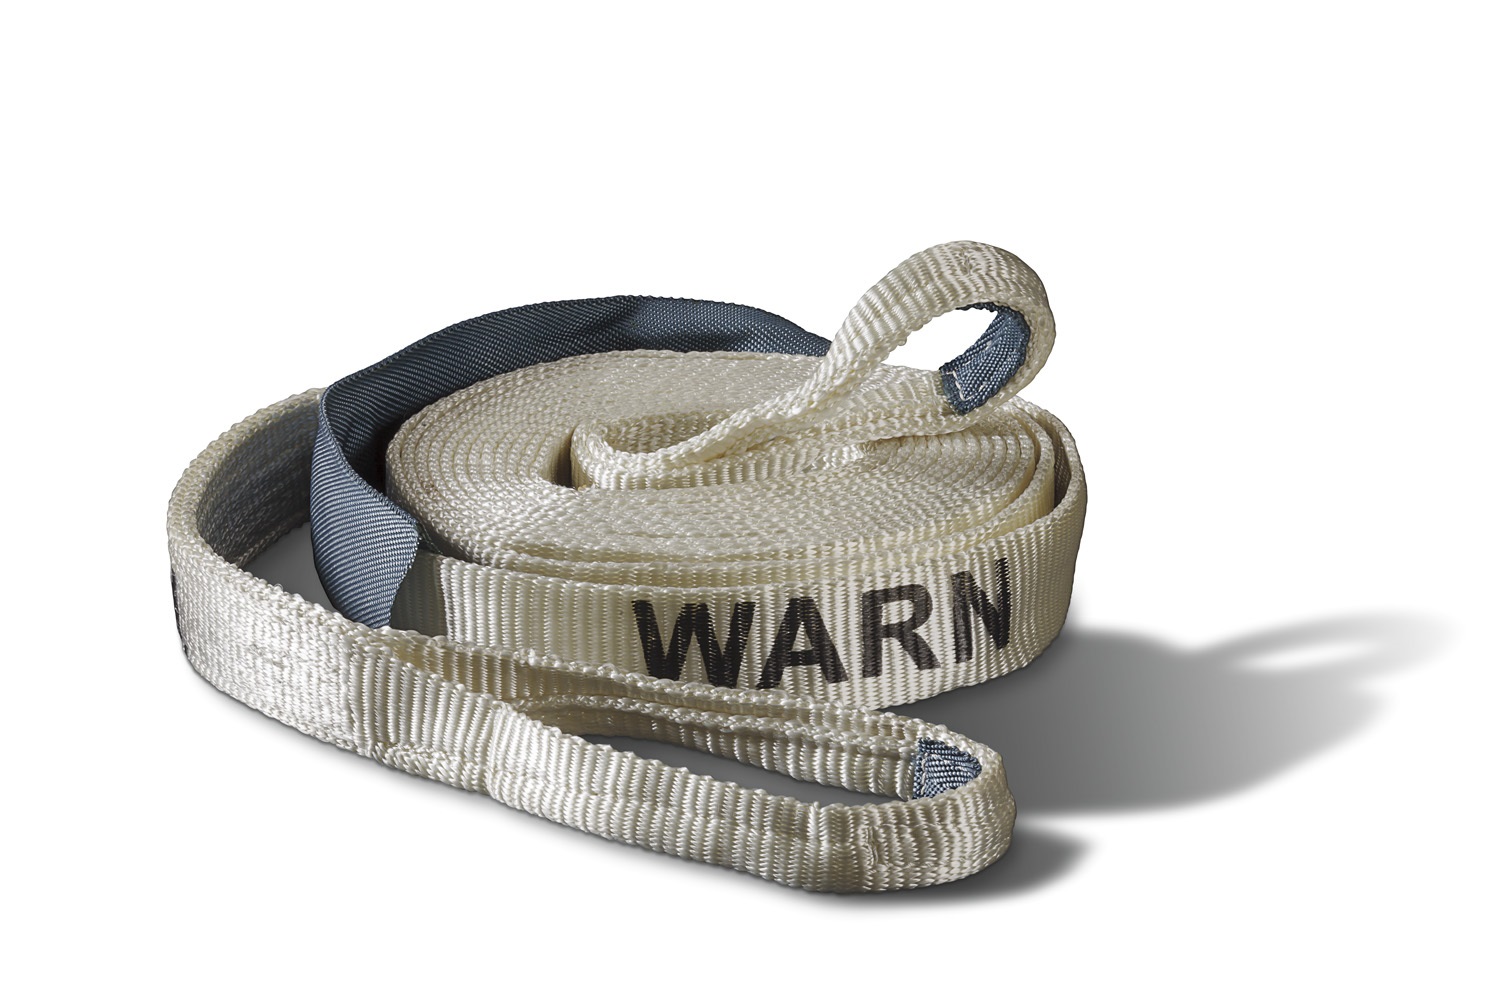 Warn Warn 88922 Recovery Strap; Premium